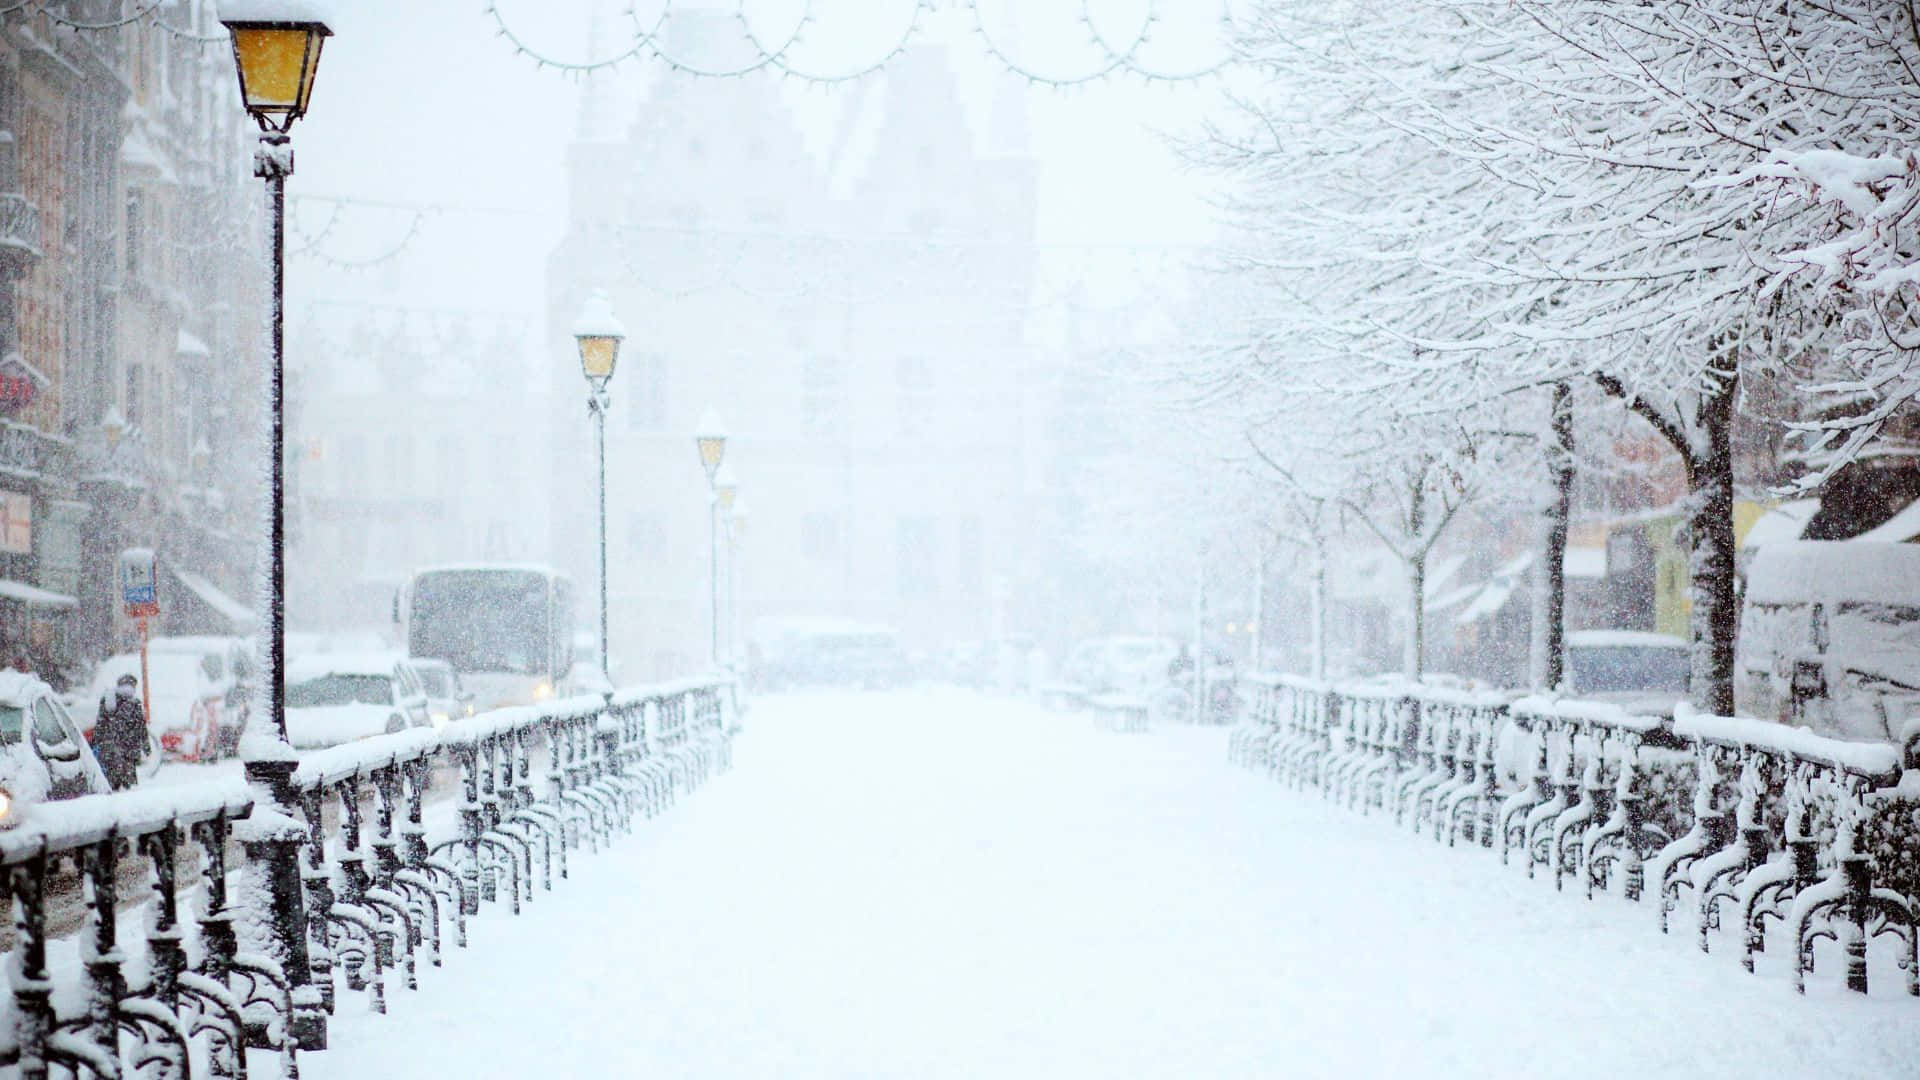 Enjoy the winter beauty of Snow Zoom